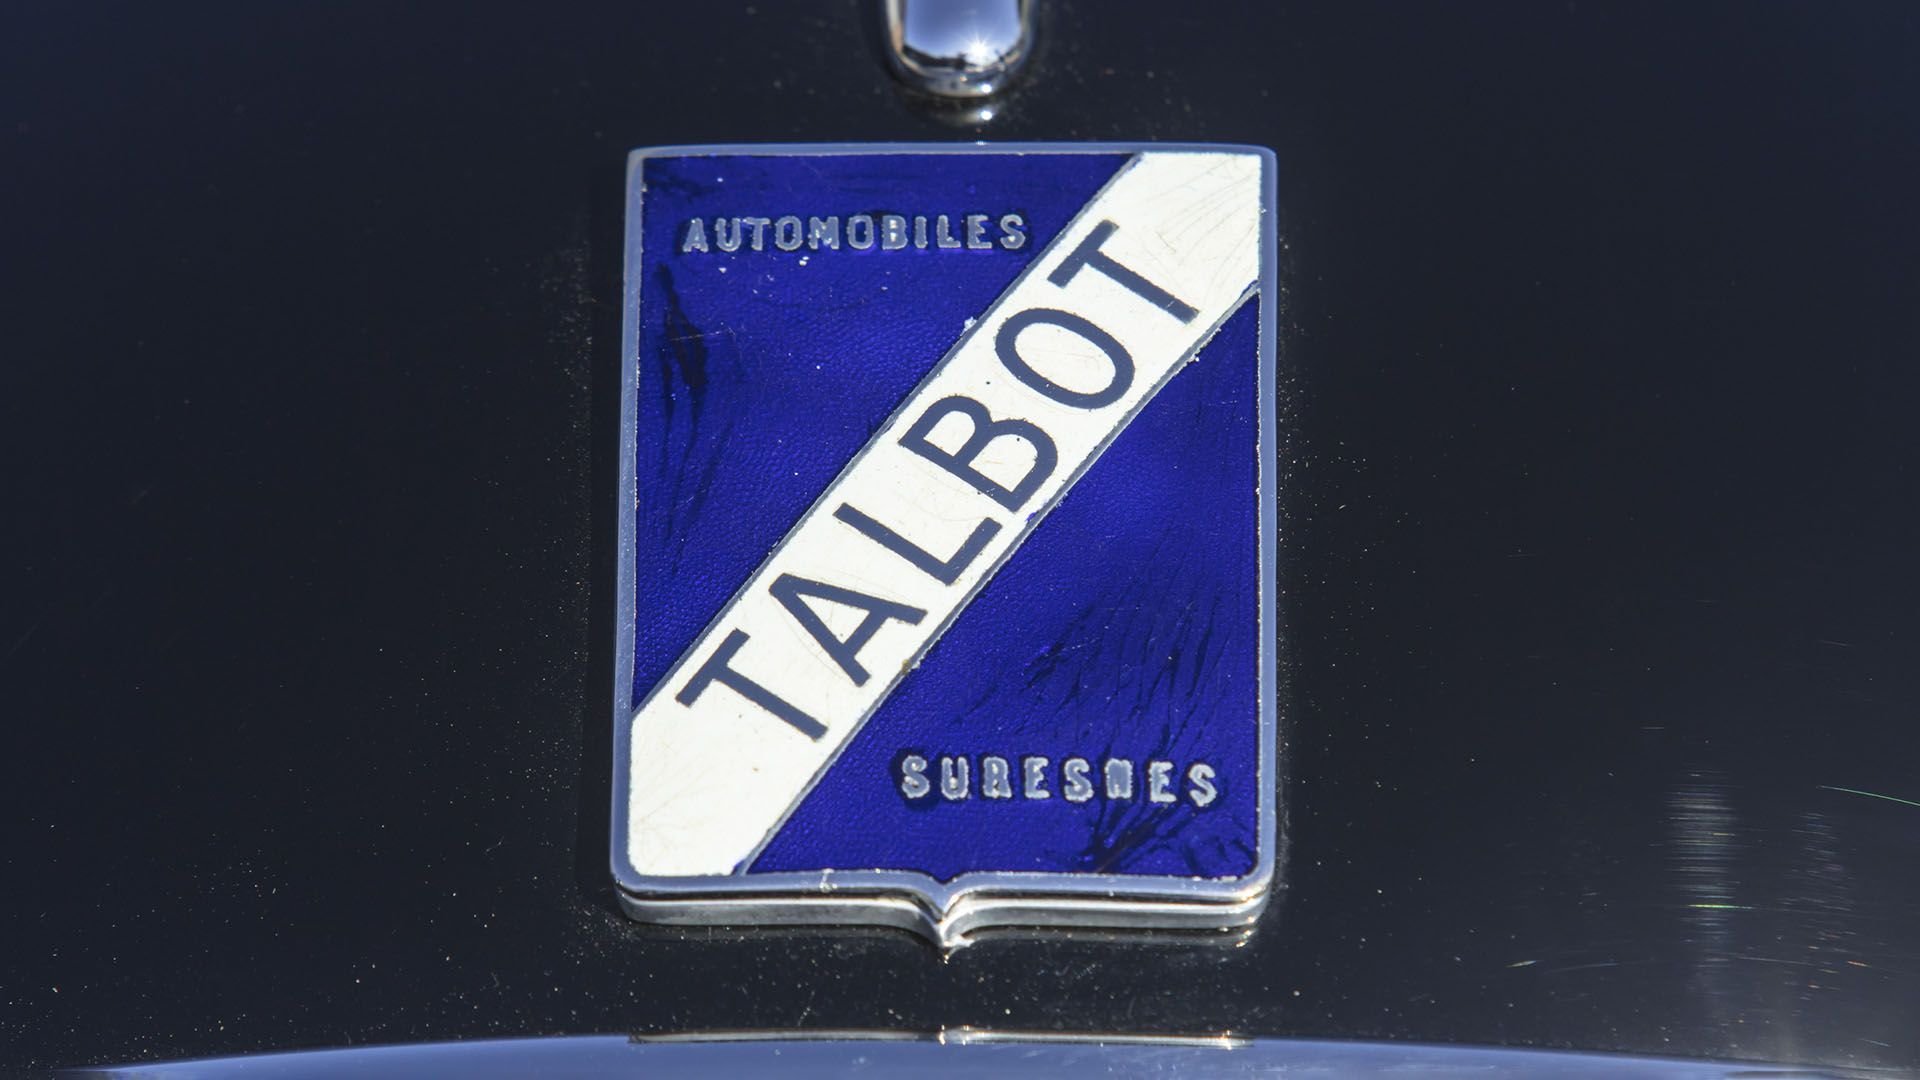 For Sale 1938 Talbot-Lago T120 Cabriolet d'Usine